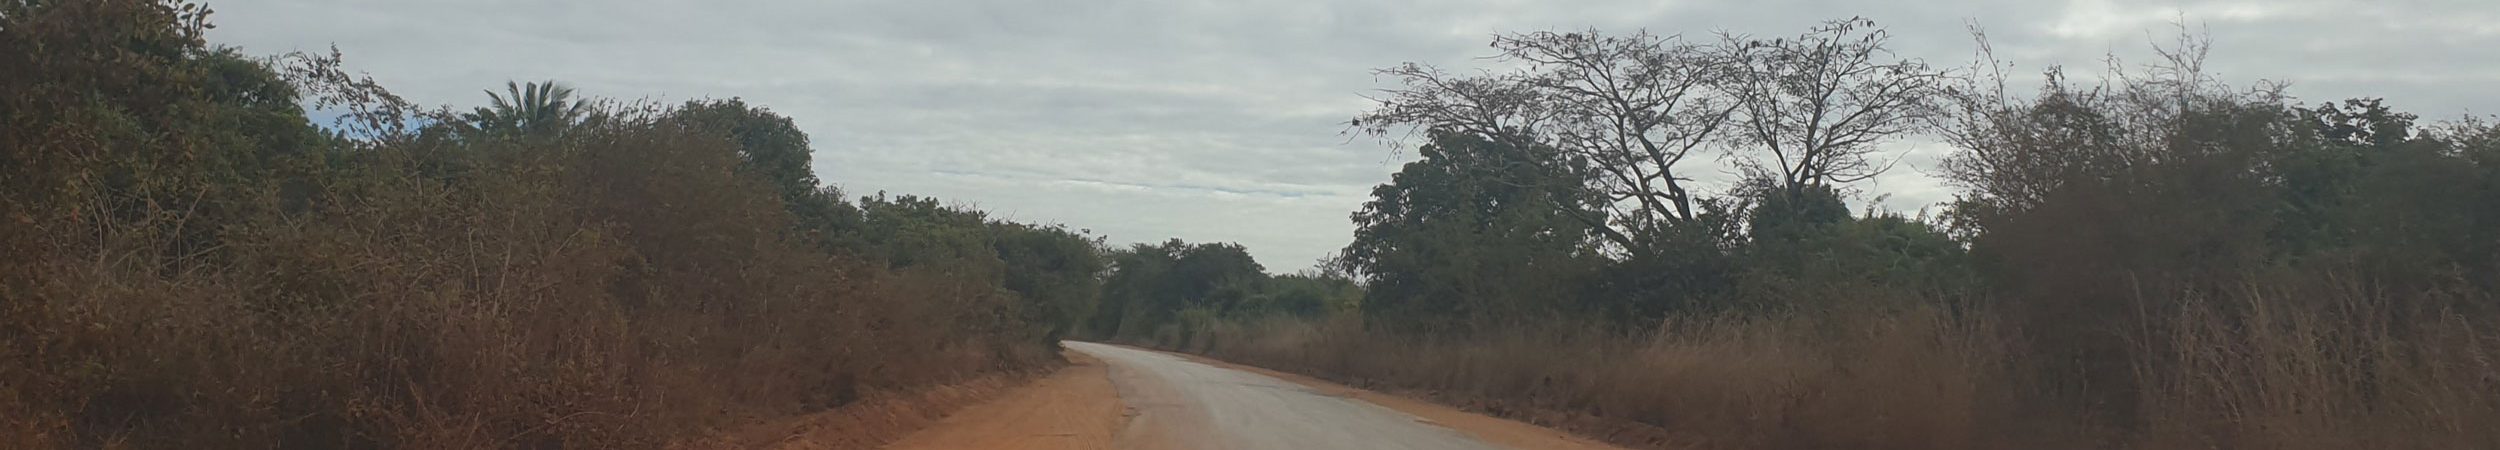 Mozambique EN1 Road